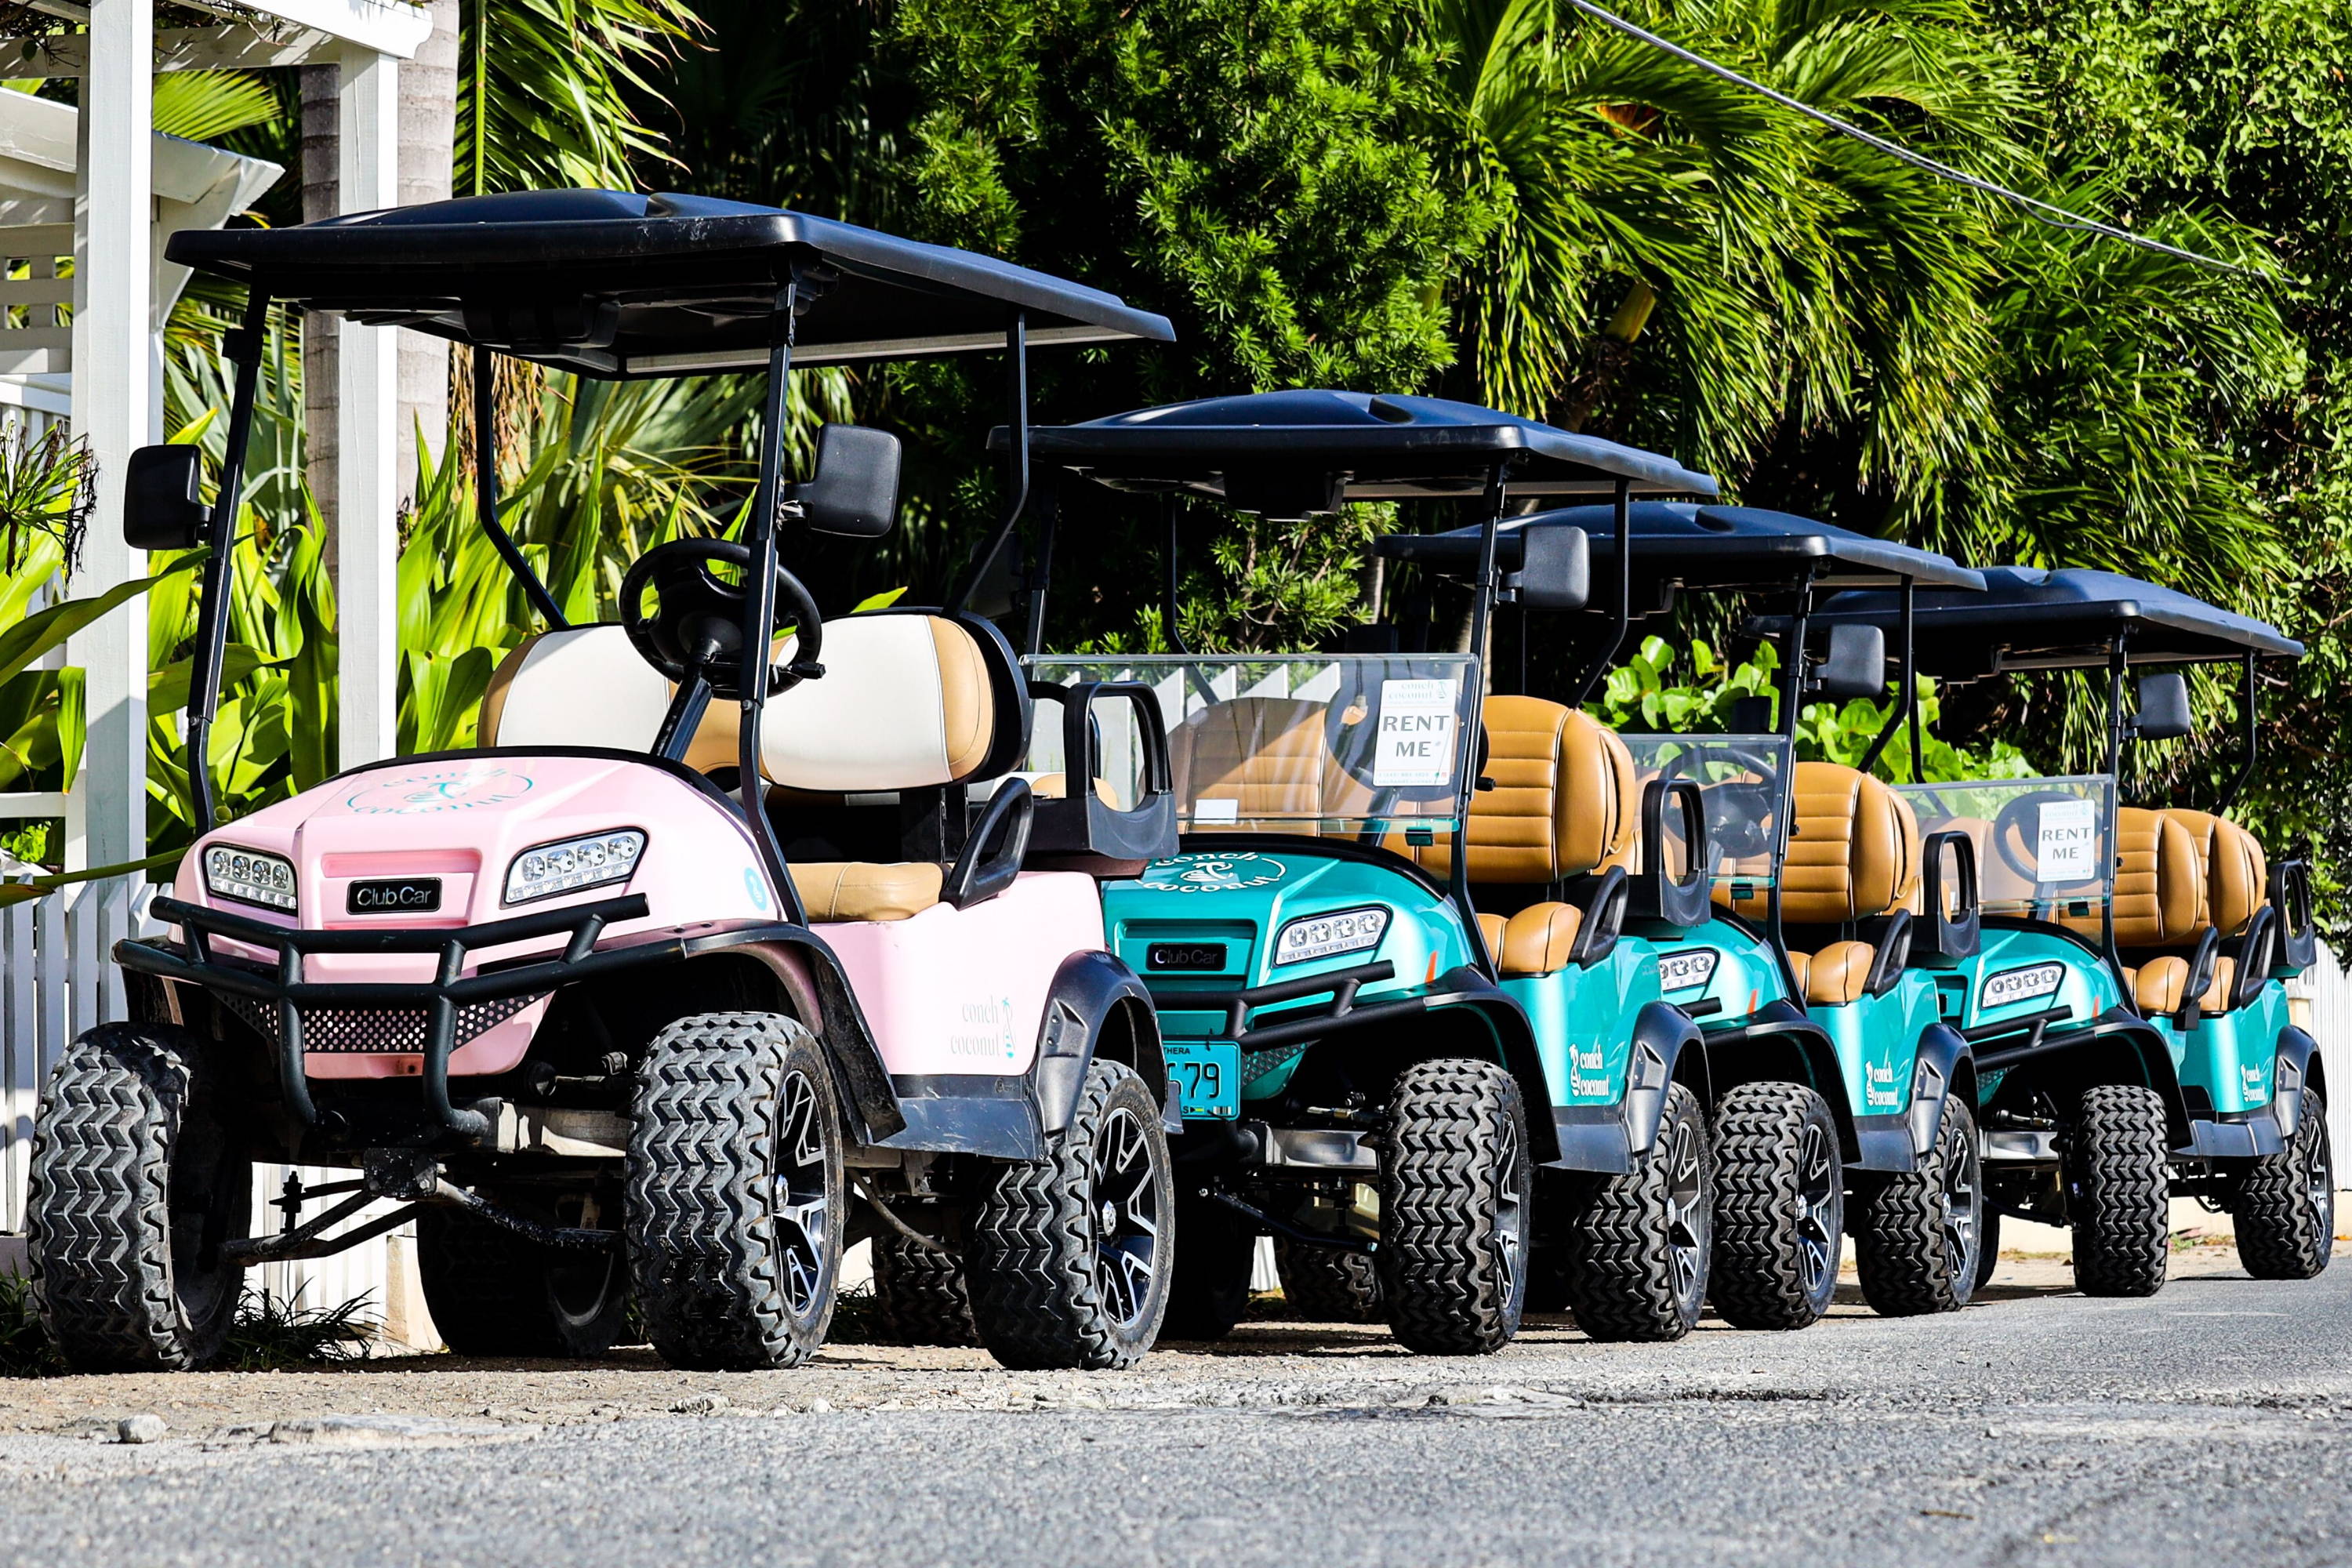 golf cart rental nassau bahamas cruise port